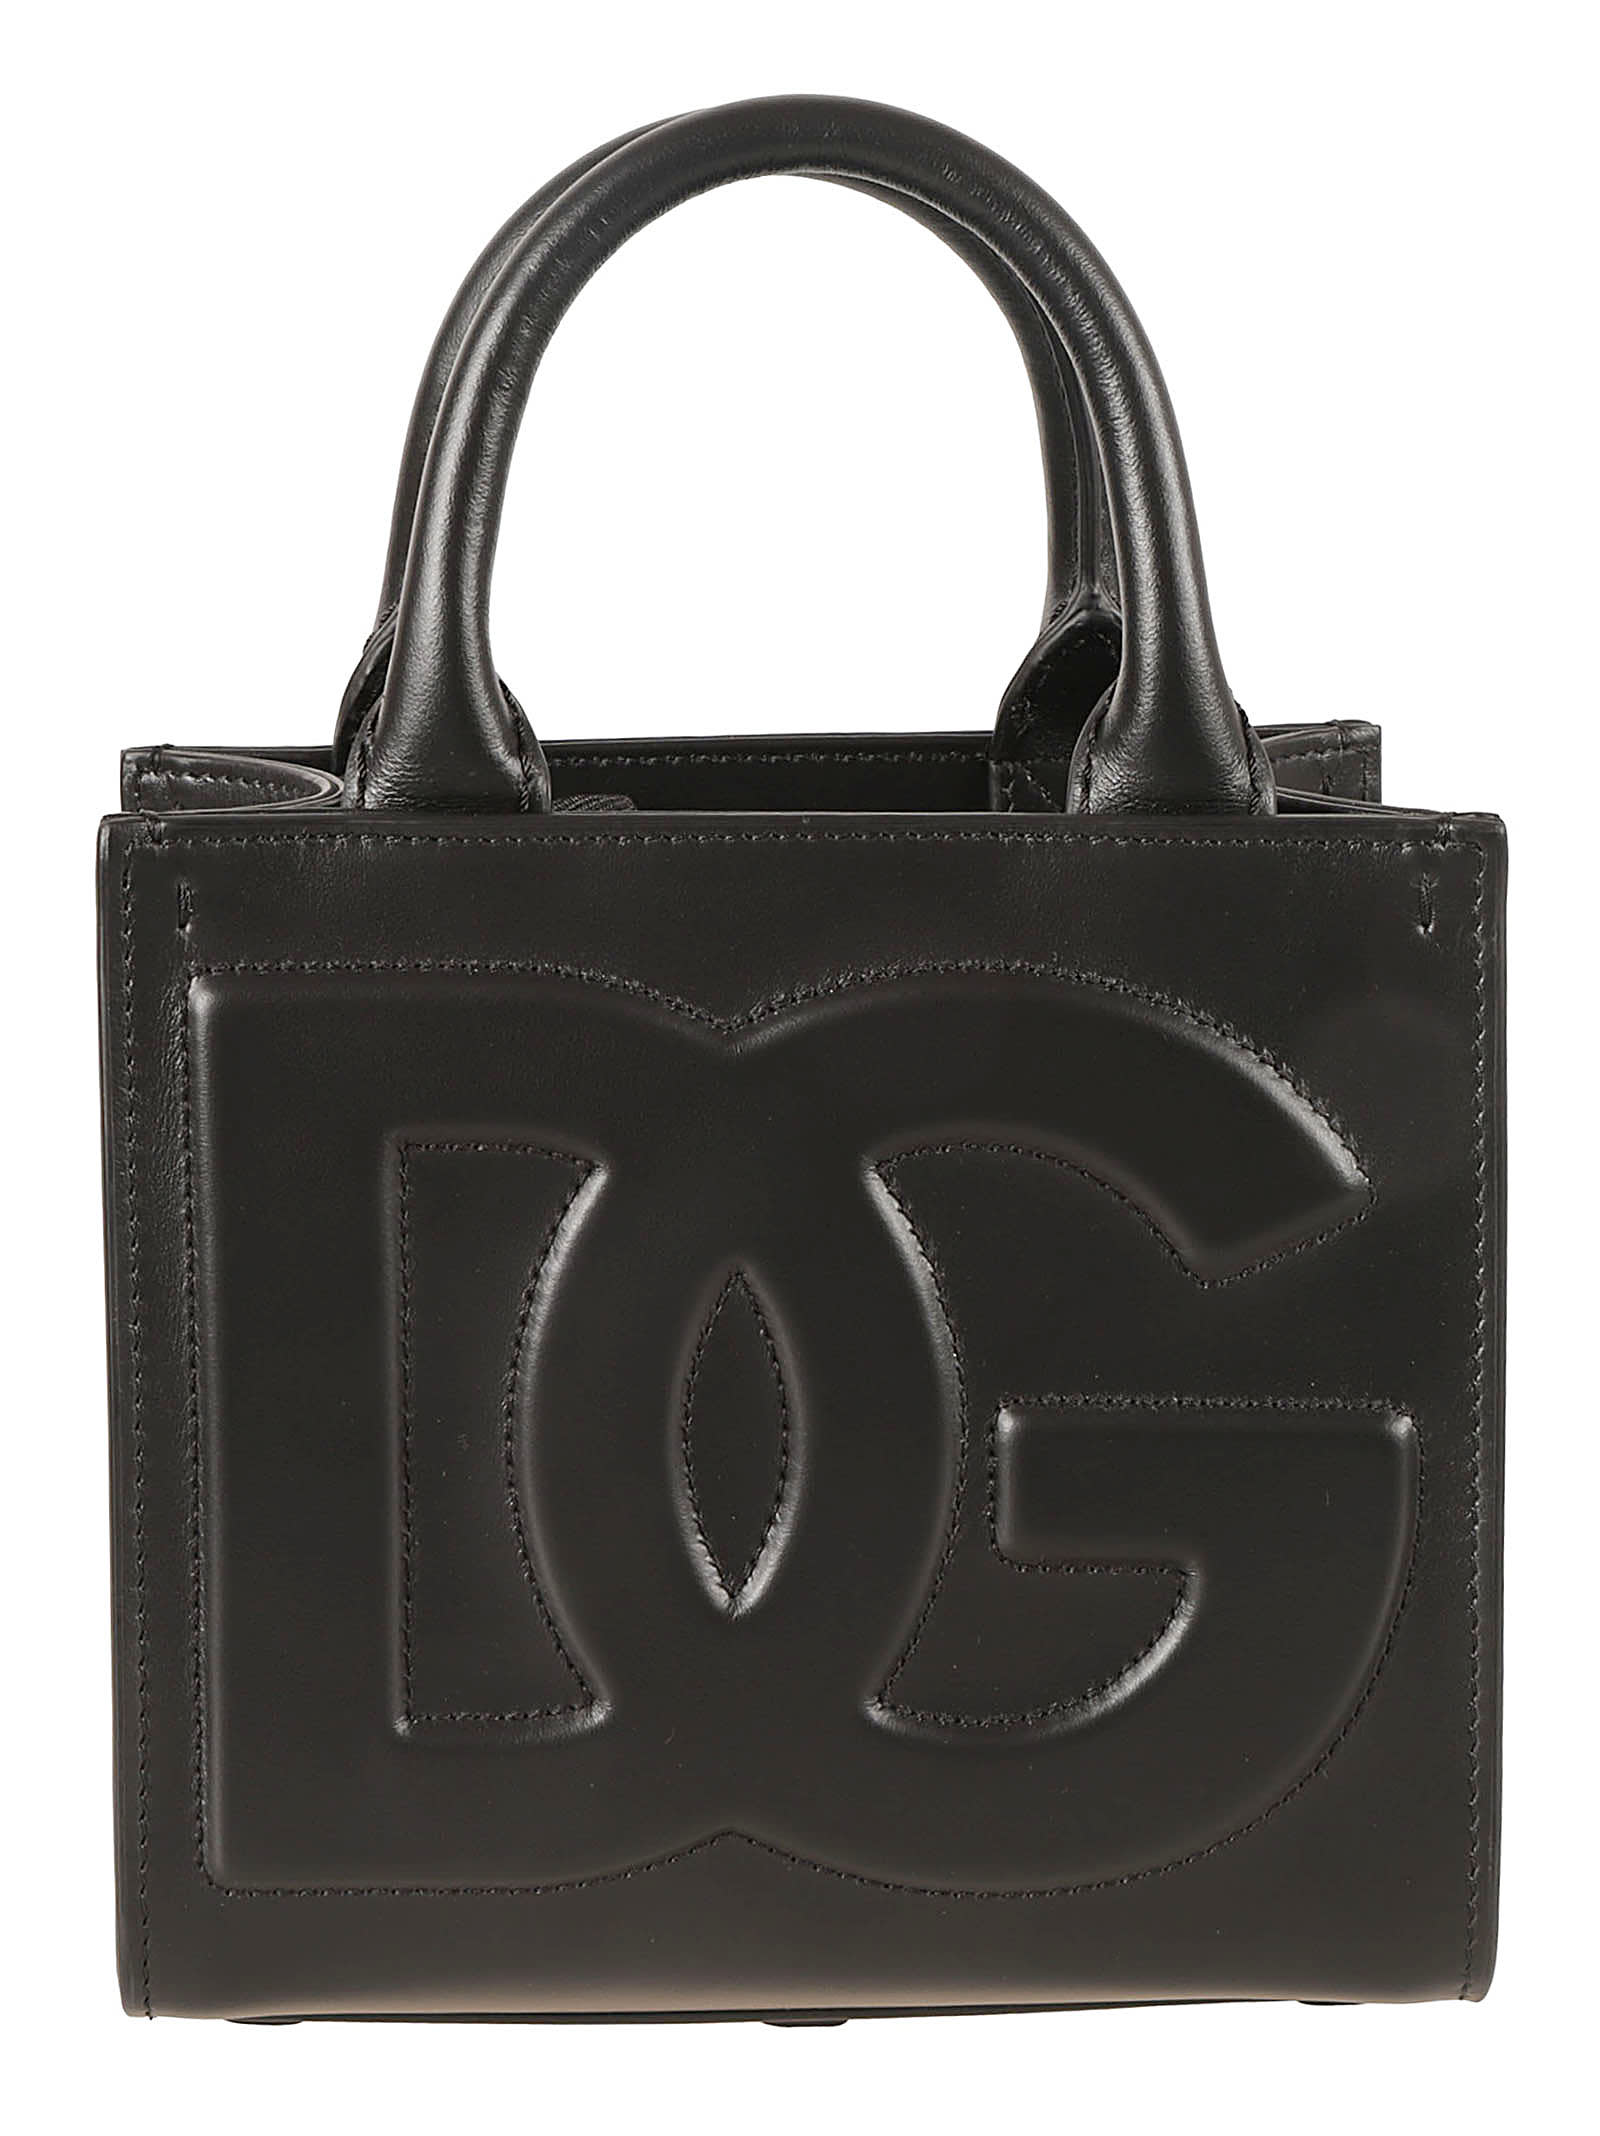 Dolce & Gabbana Leather Tote In Black